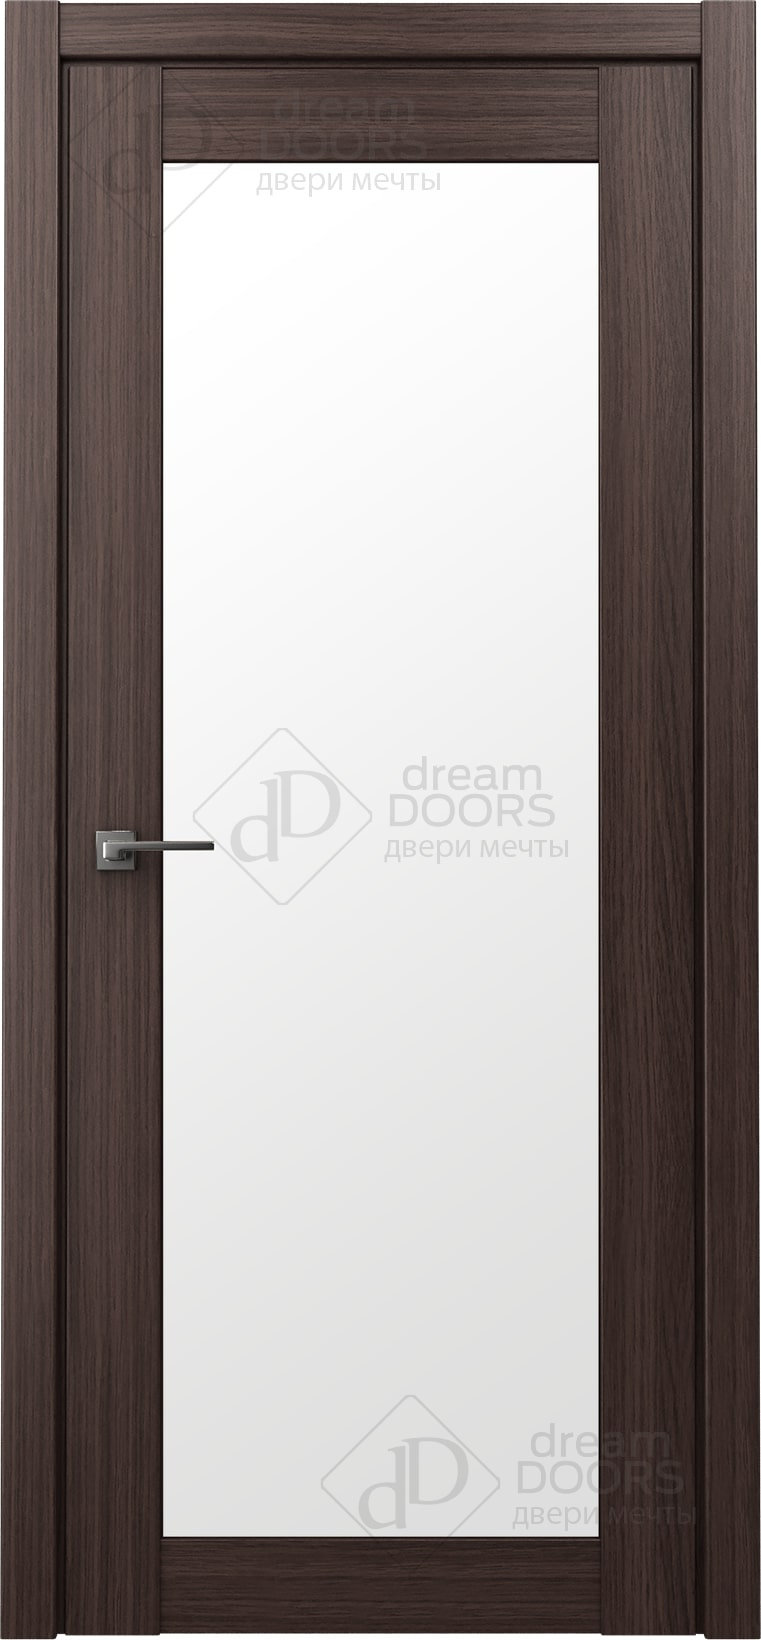 Dream Doors Межкомнатная дверь Престиж 1, арт. 16430 - фото №6